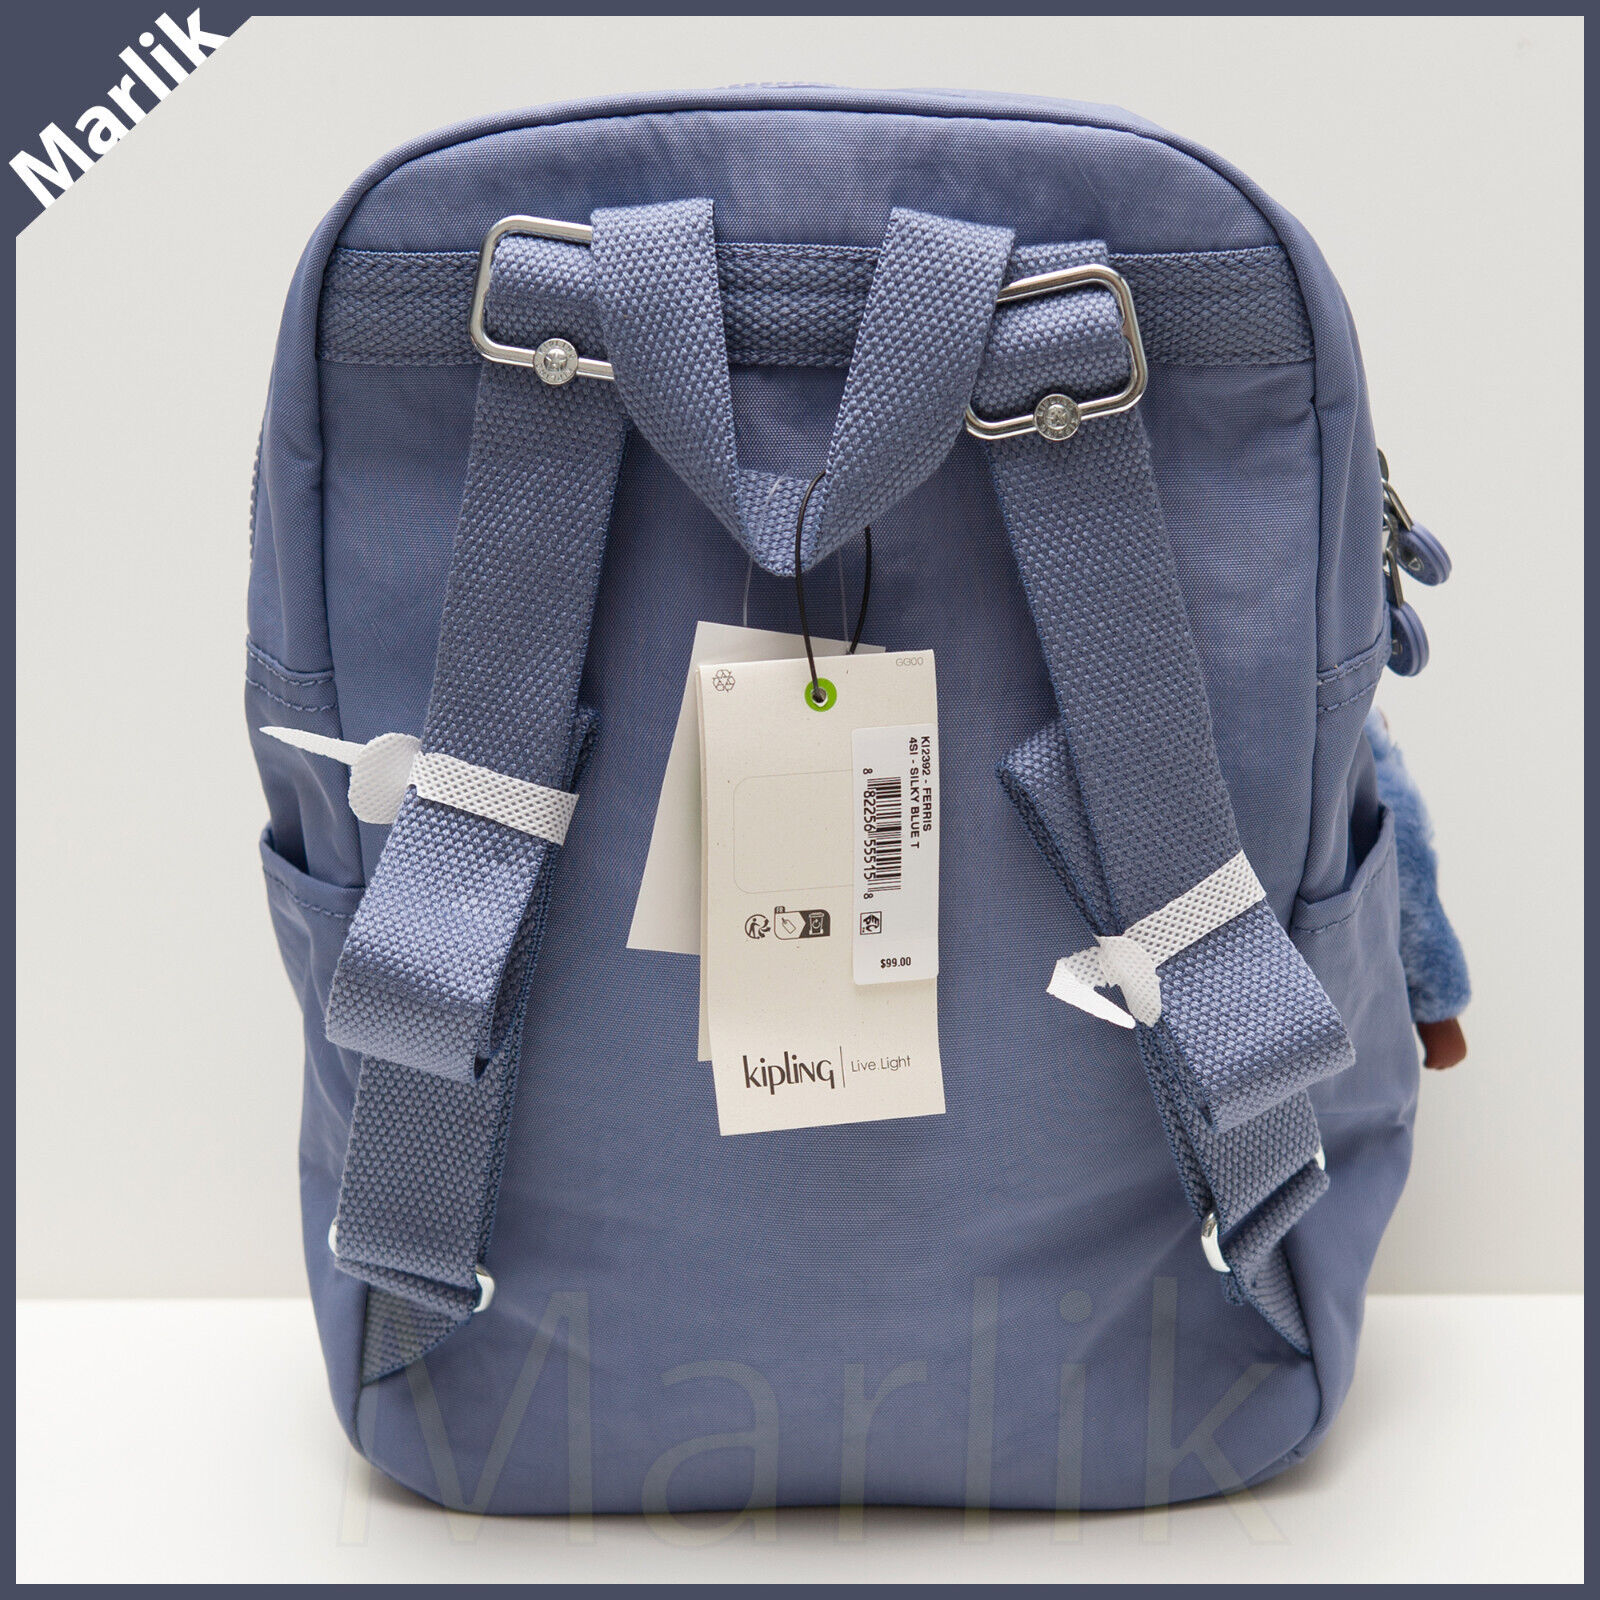 Kipling Ferris Backpack Small KI2392, 4 SI, Silky Blue Tonal 13